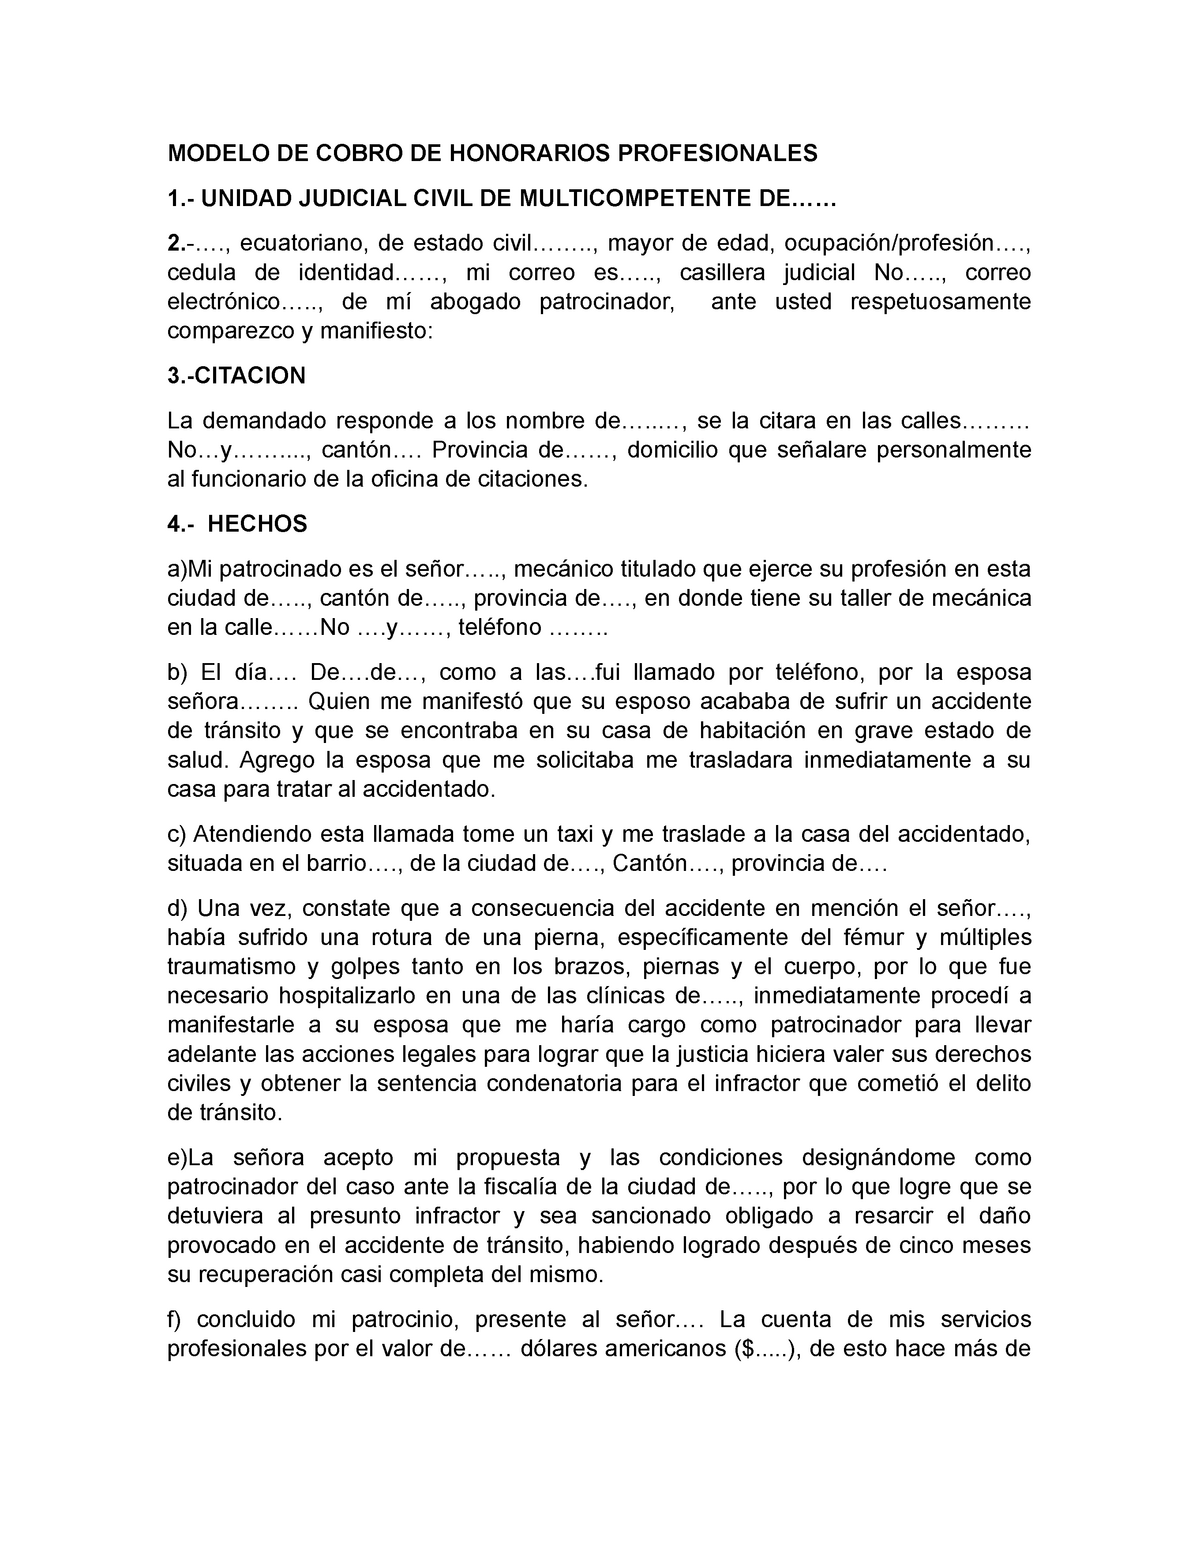 Modelo DE Cobro DE Honorarios Profesionales - MODELO DE COBRO DE HONORARIOS  PROFESIONALES  UNIDAD - Studocu